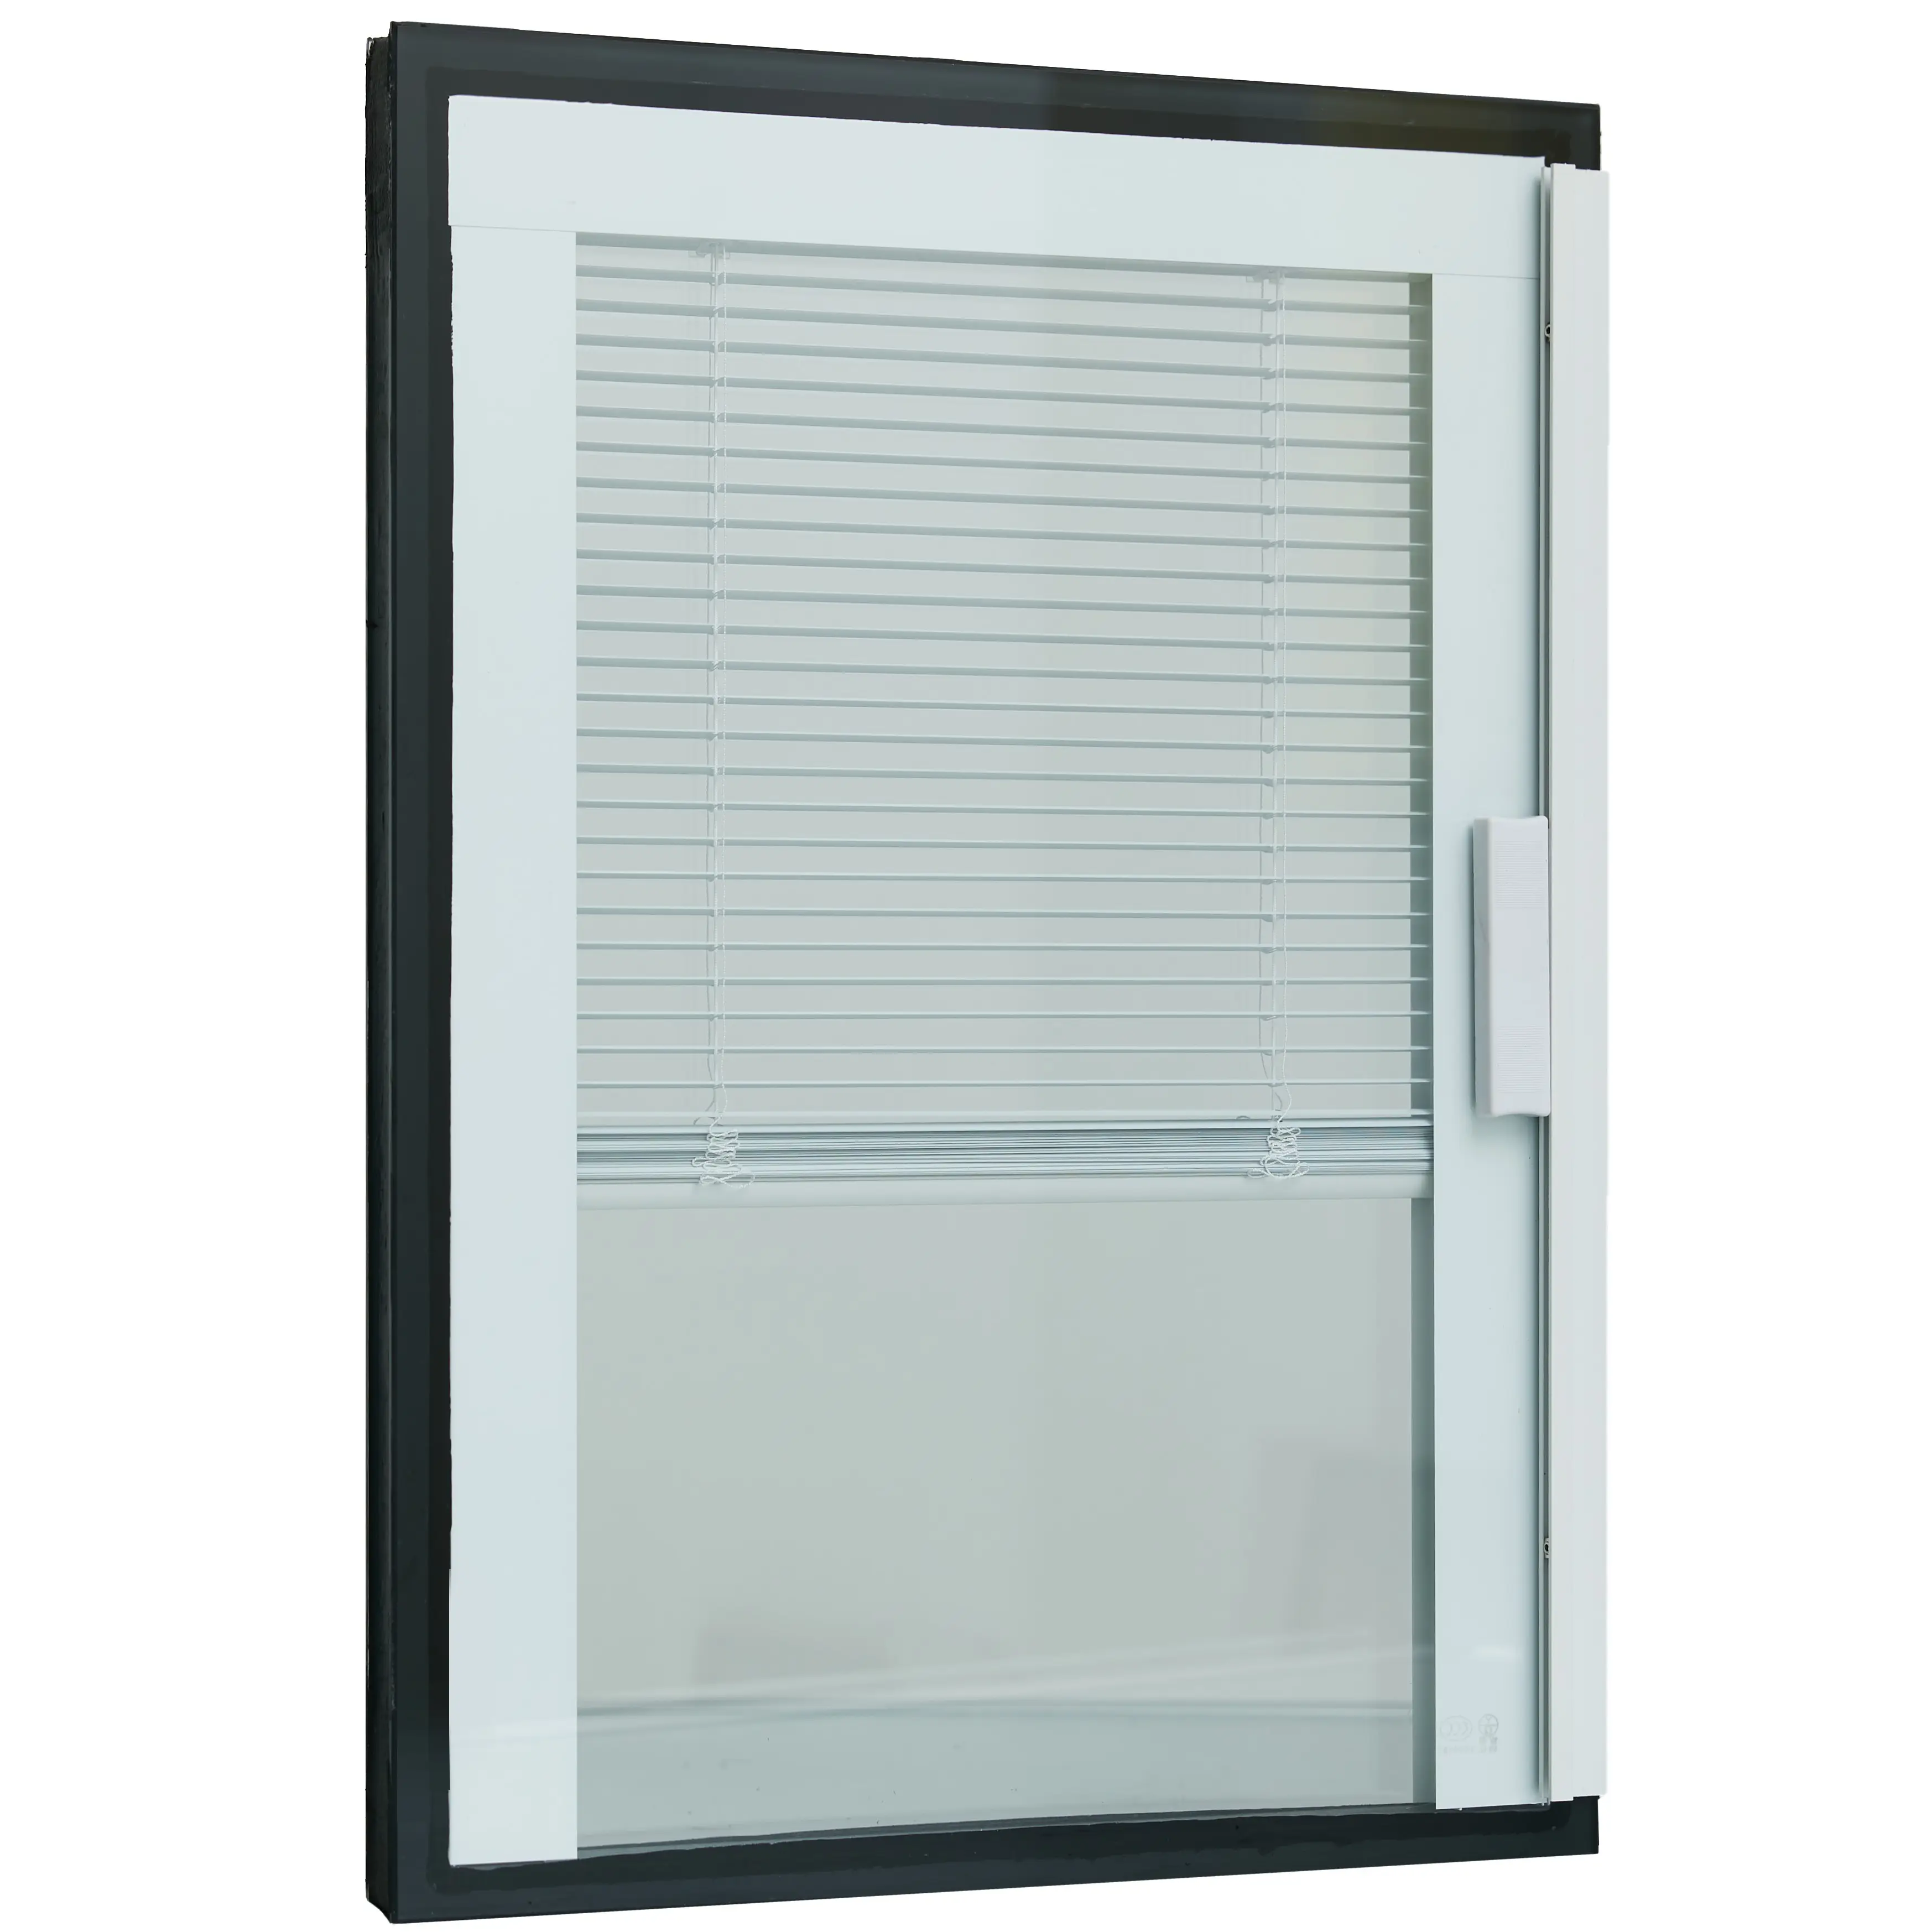 High quality integral blinds between glass for windows Internal Mini Blinds Blinds